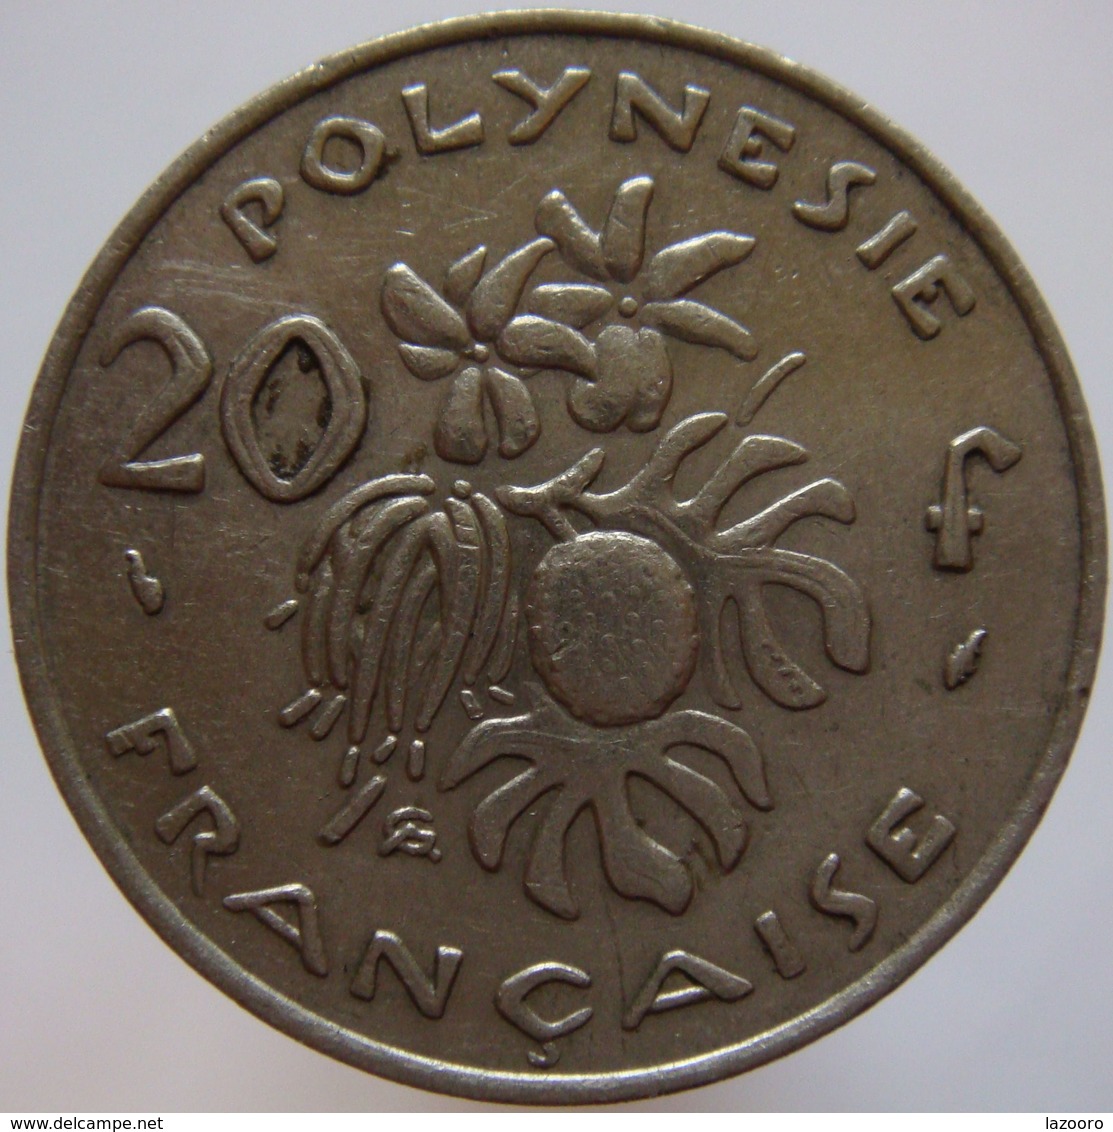 LaZooRo: French Polynesia 20 Francs 1975 VF / XF - French Polynesia